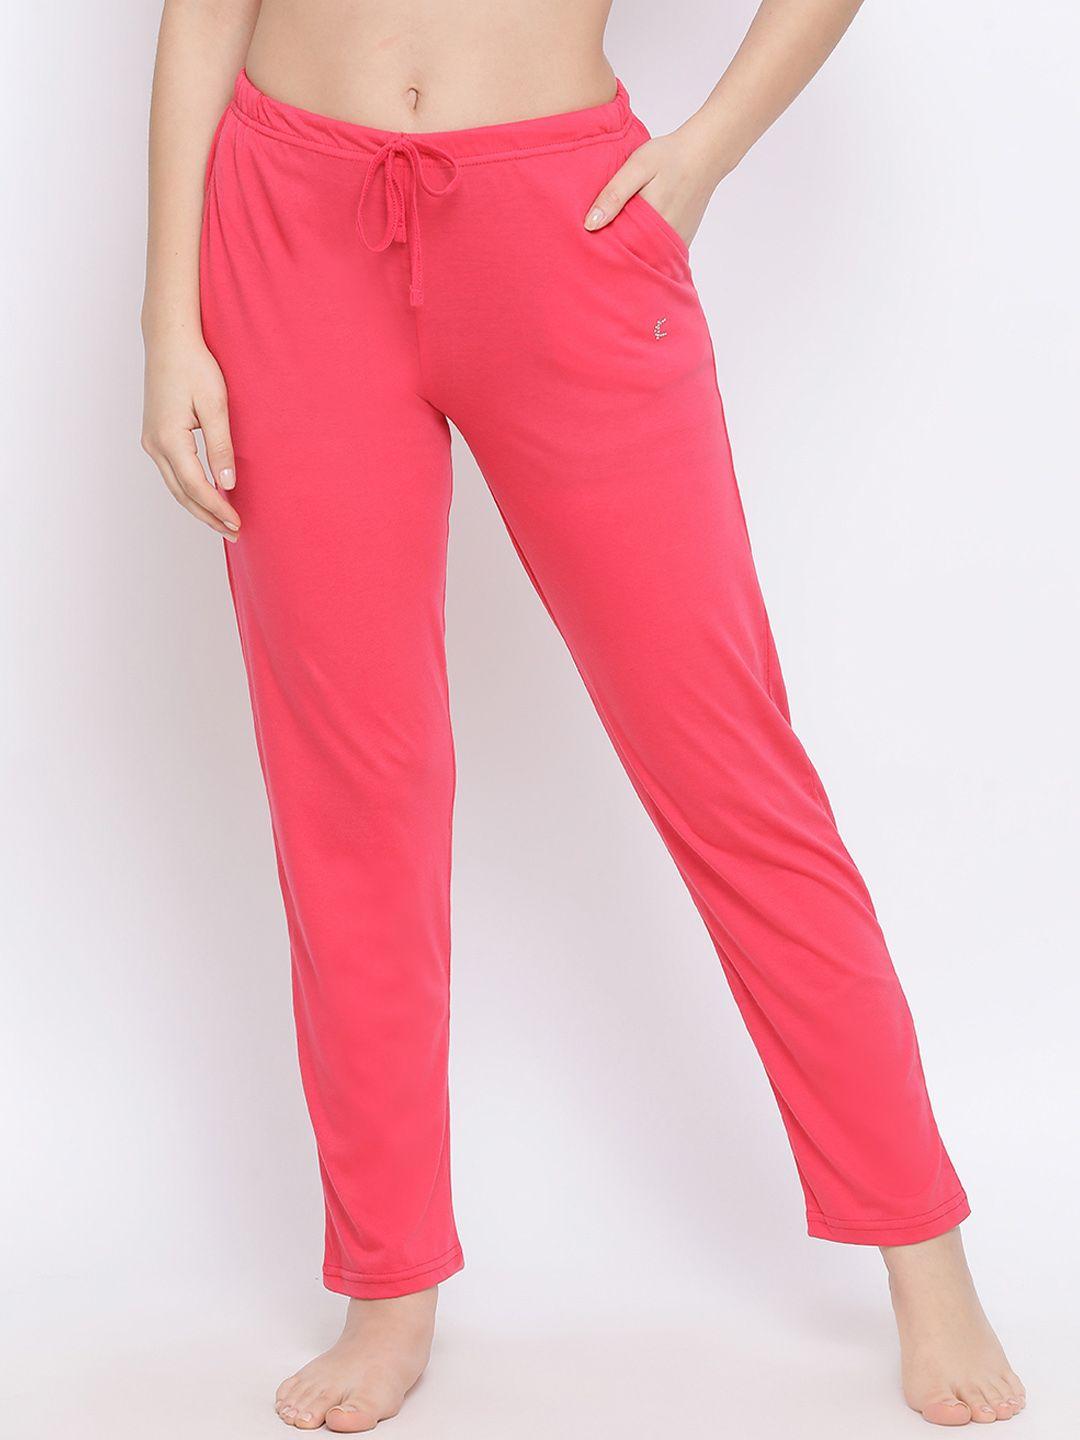 kanvin-women-pink-solid-lounge-pants